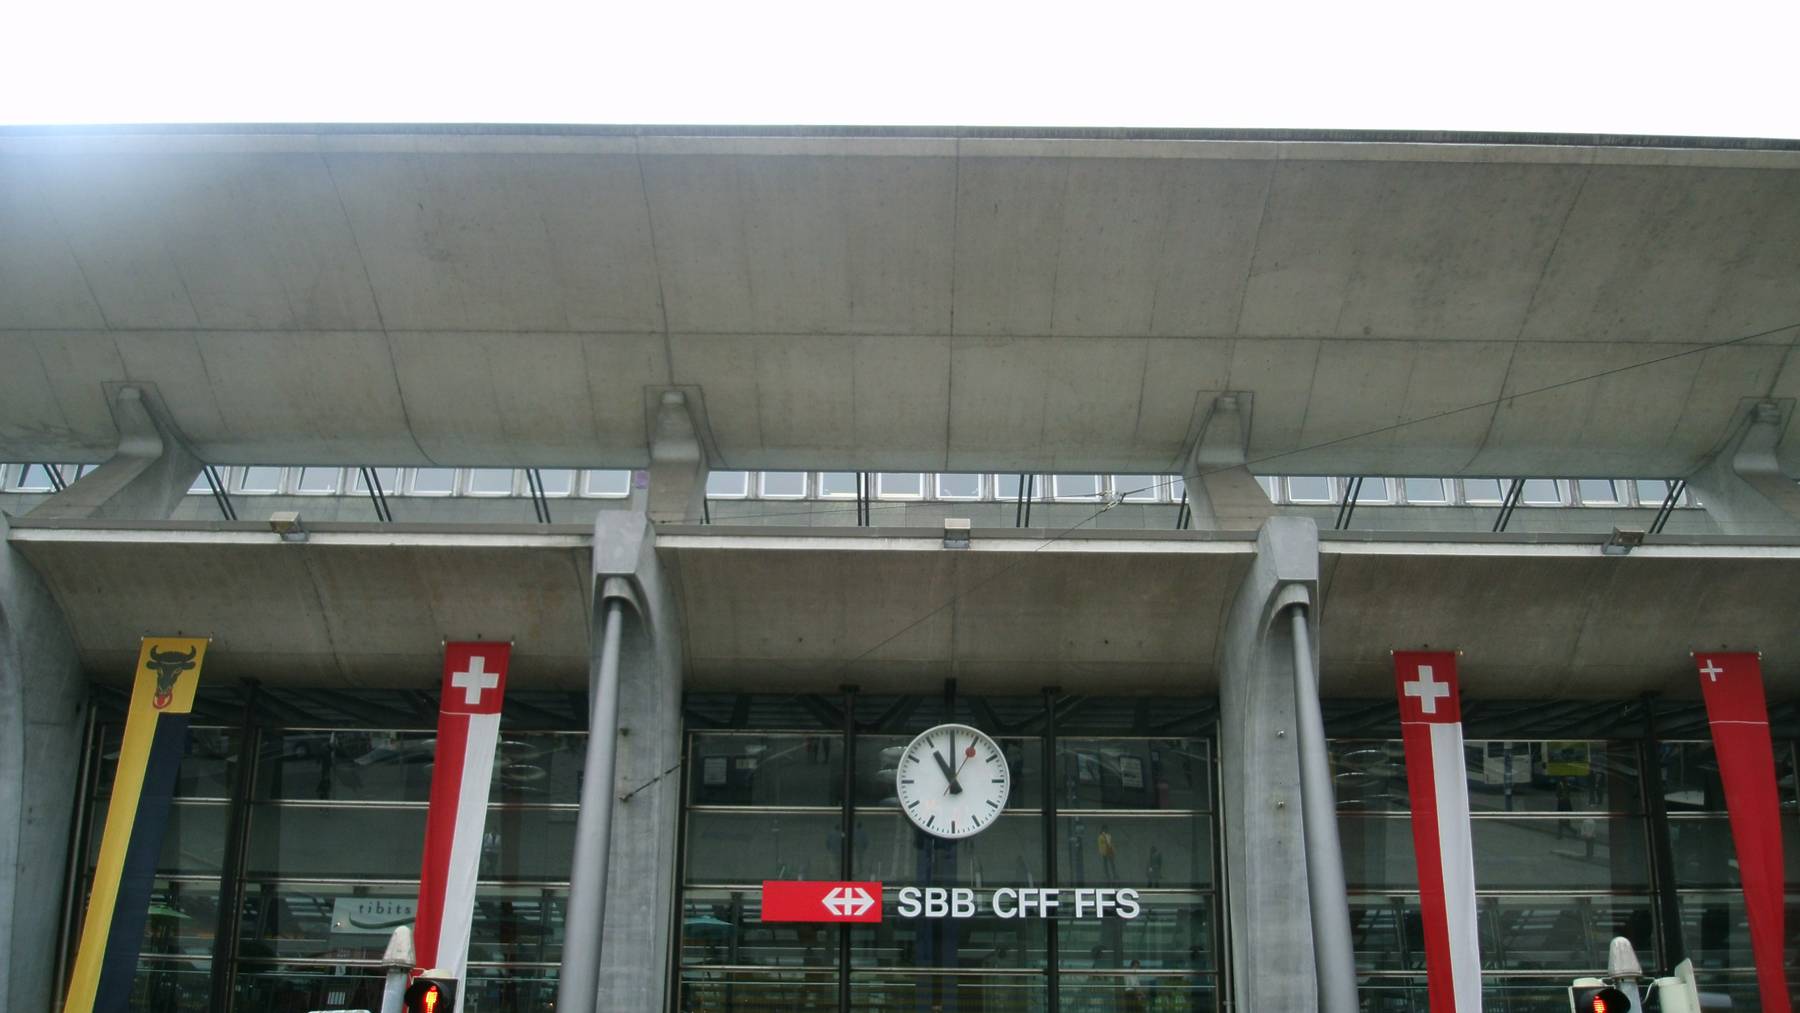 Probleme am Bahnhof Luzern behoben